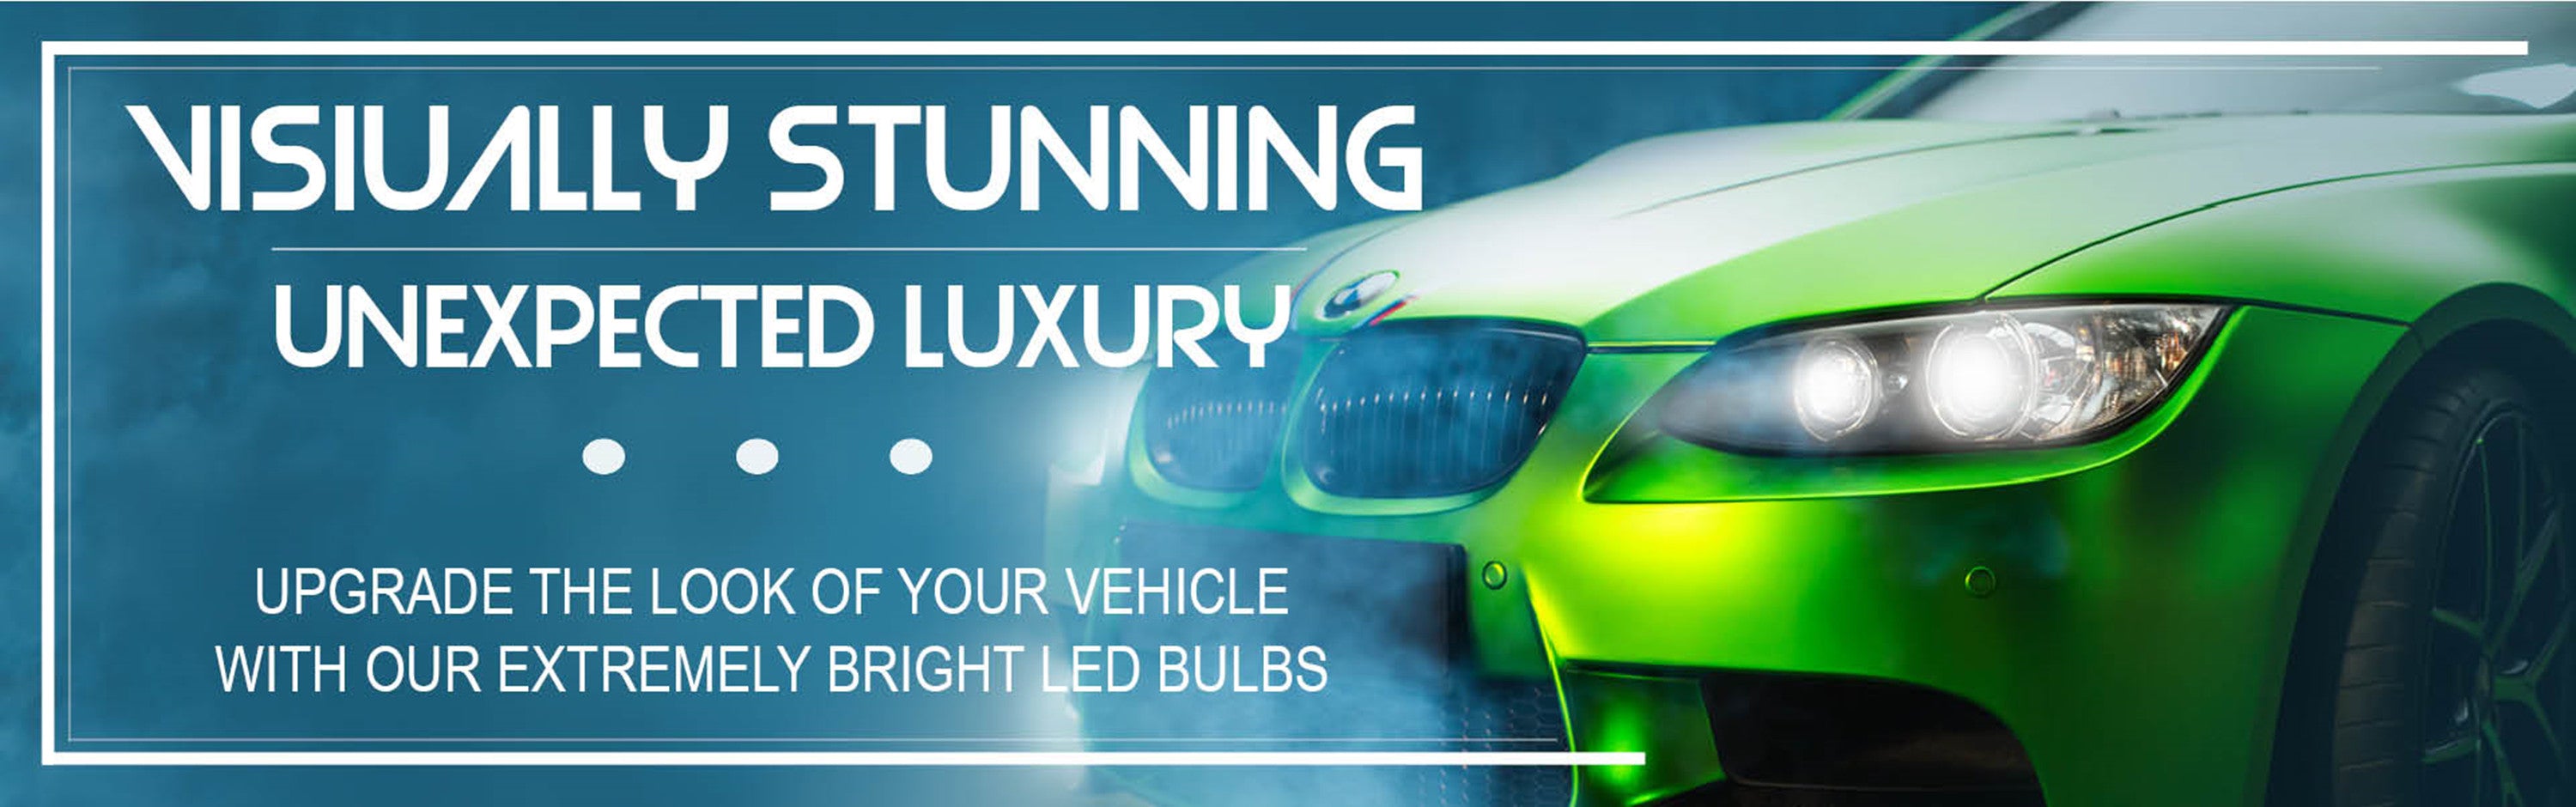 Alla LED Headlights, Fog, Tail, Signal, Interior Lights for Car, Truck